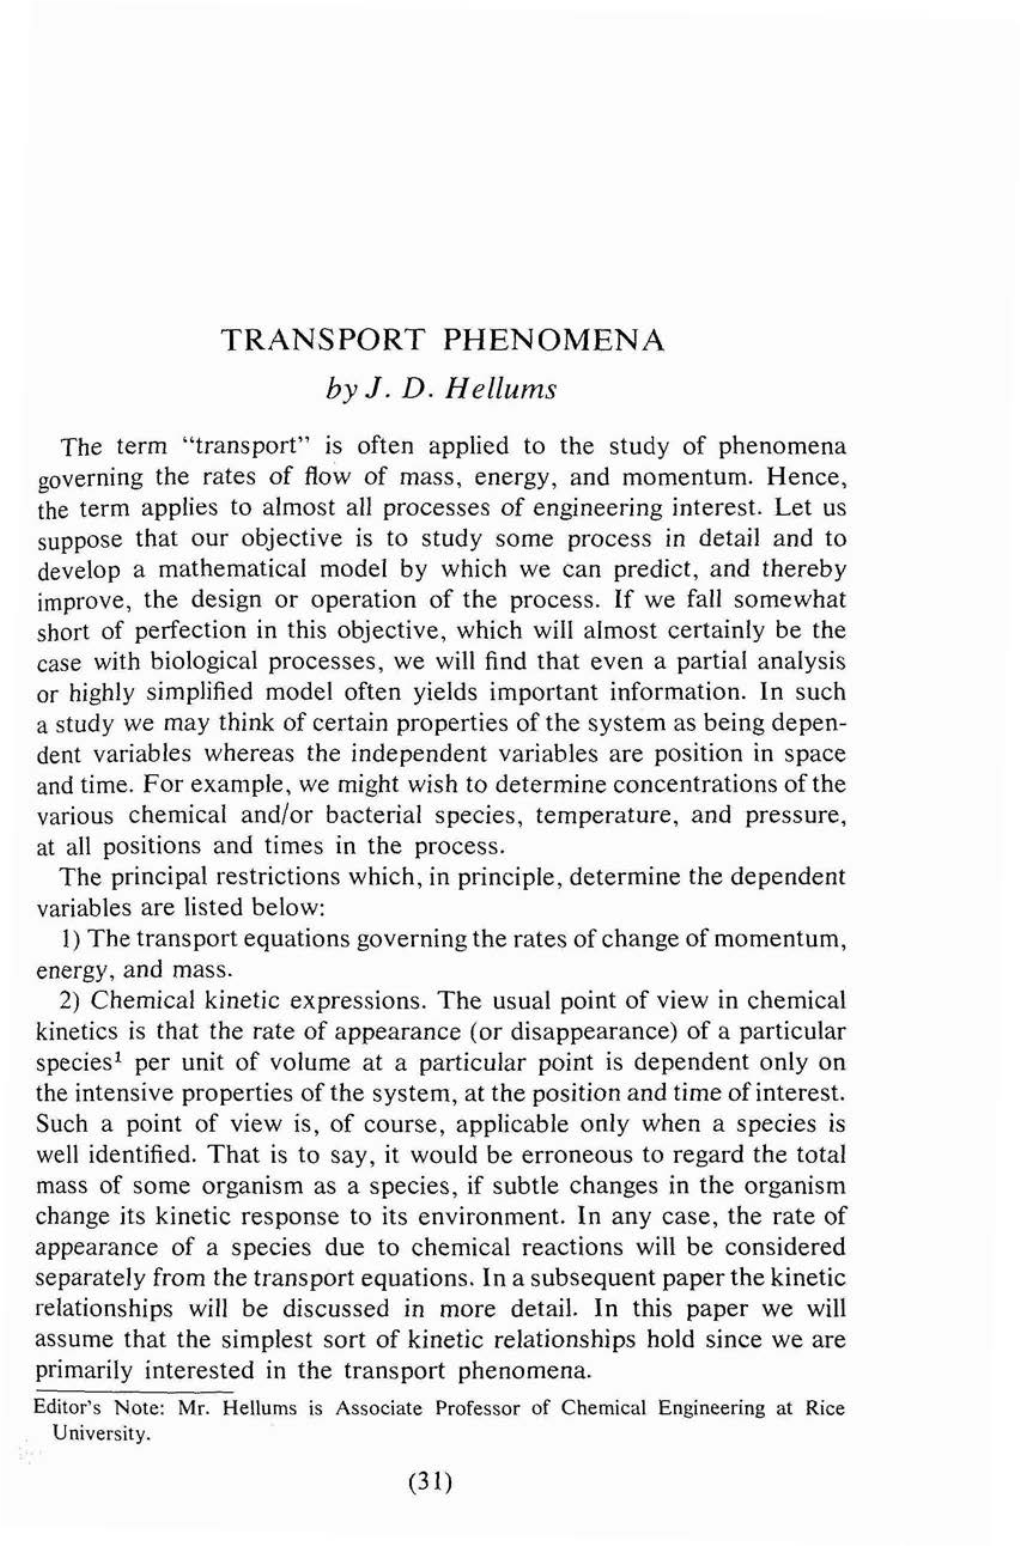 TRANSPORT PHENOMENA by J . D. Hellums